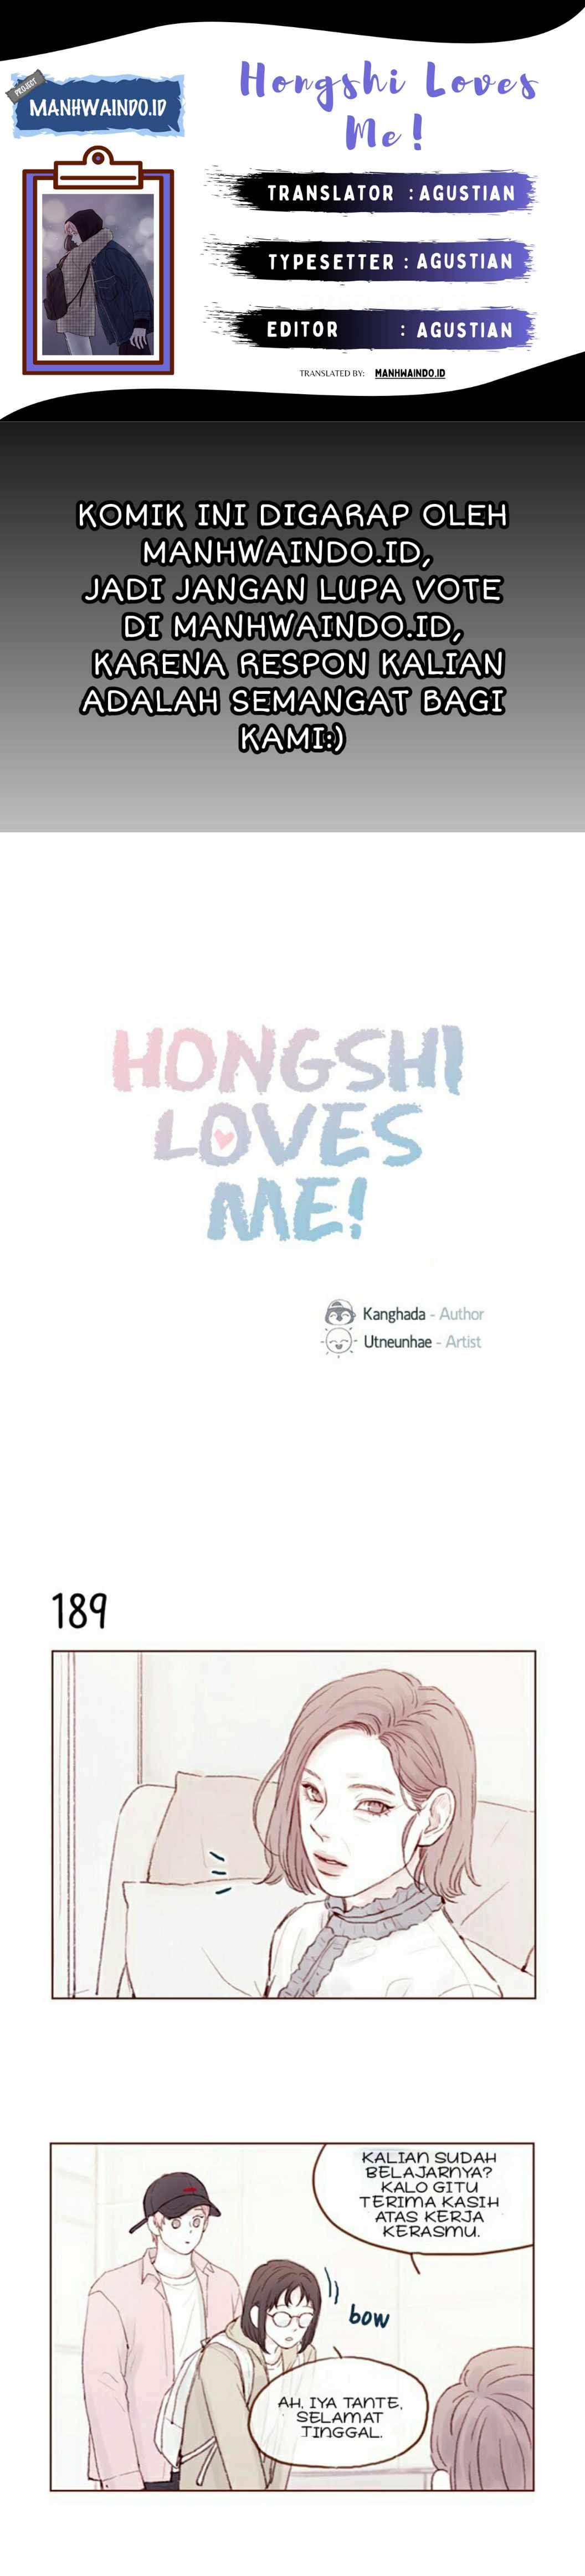 Hongshi Loves Me! Chapter 27